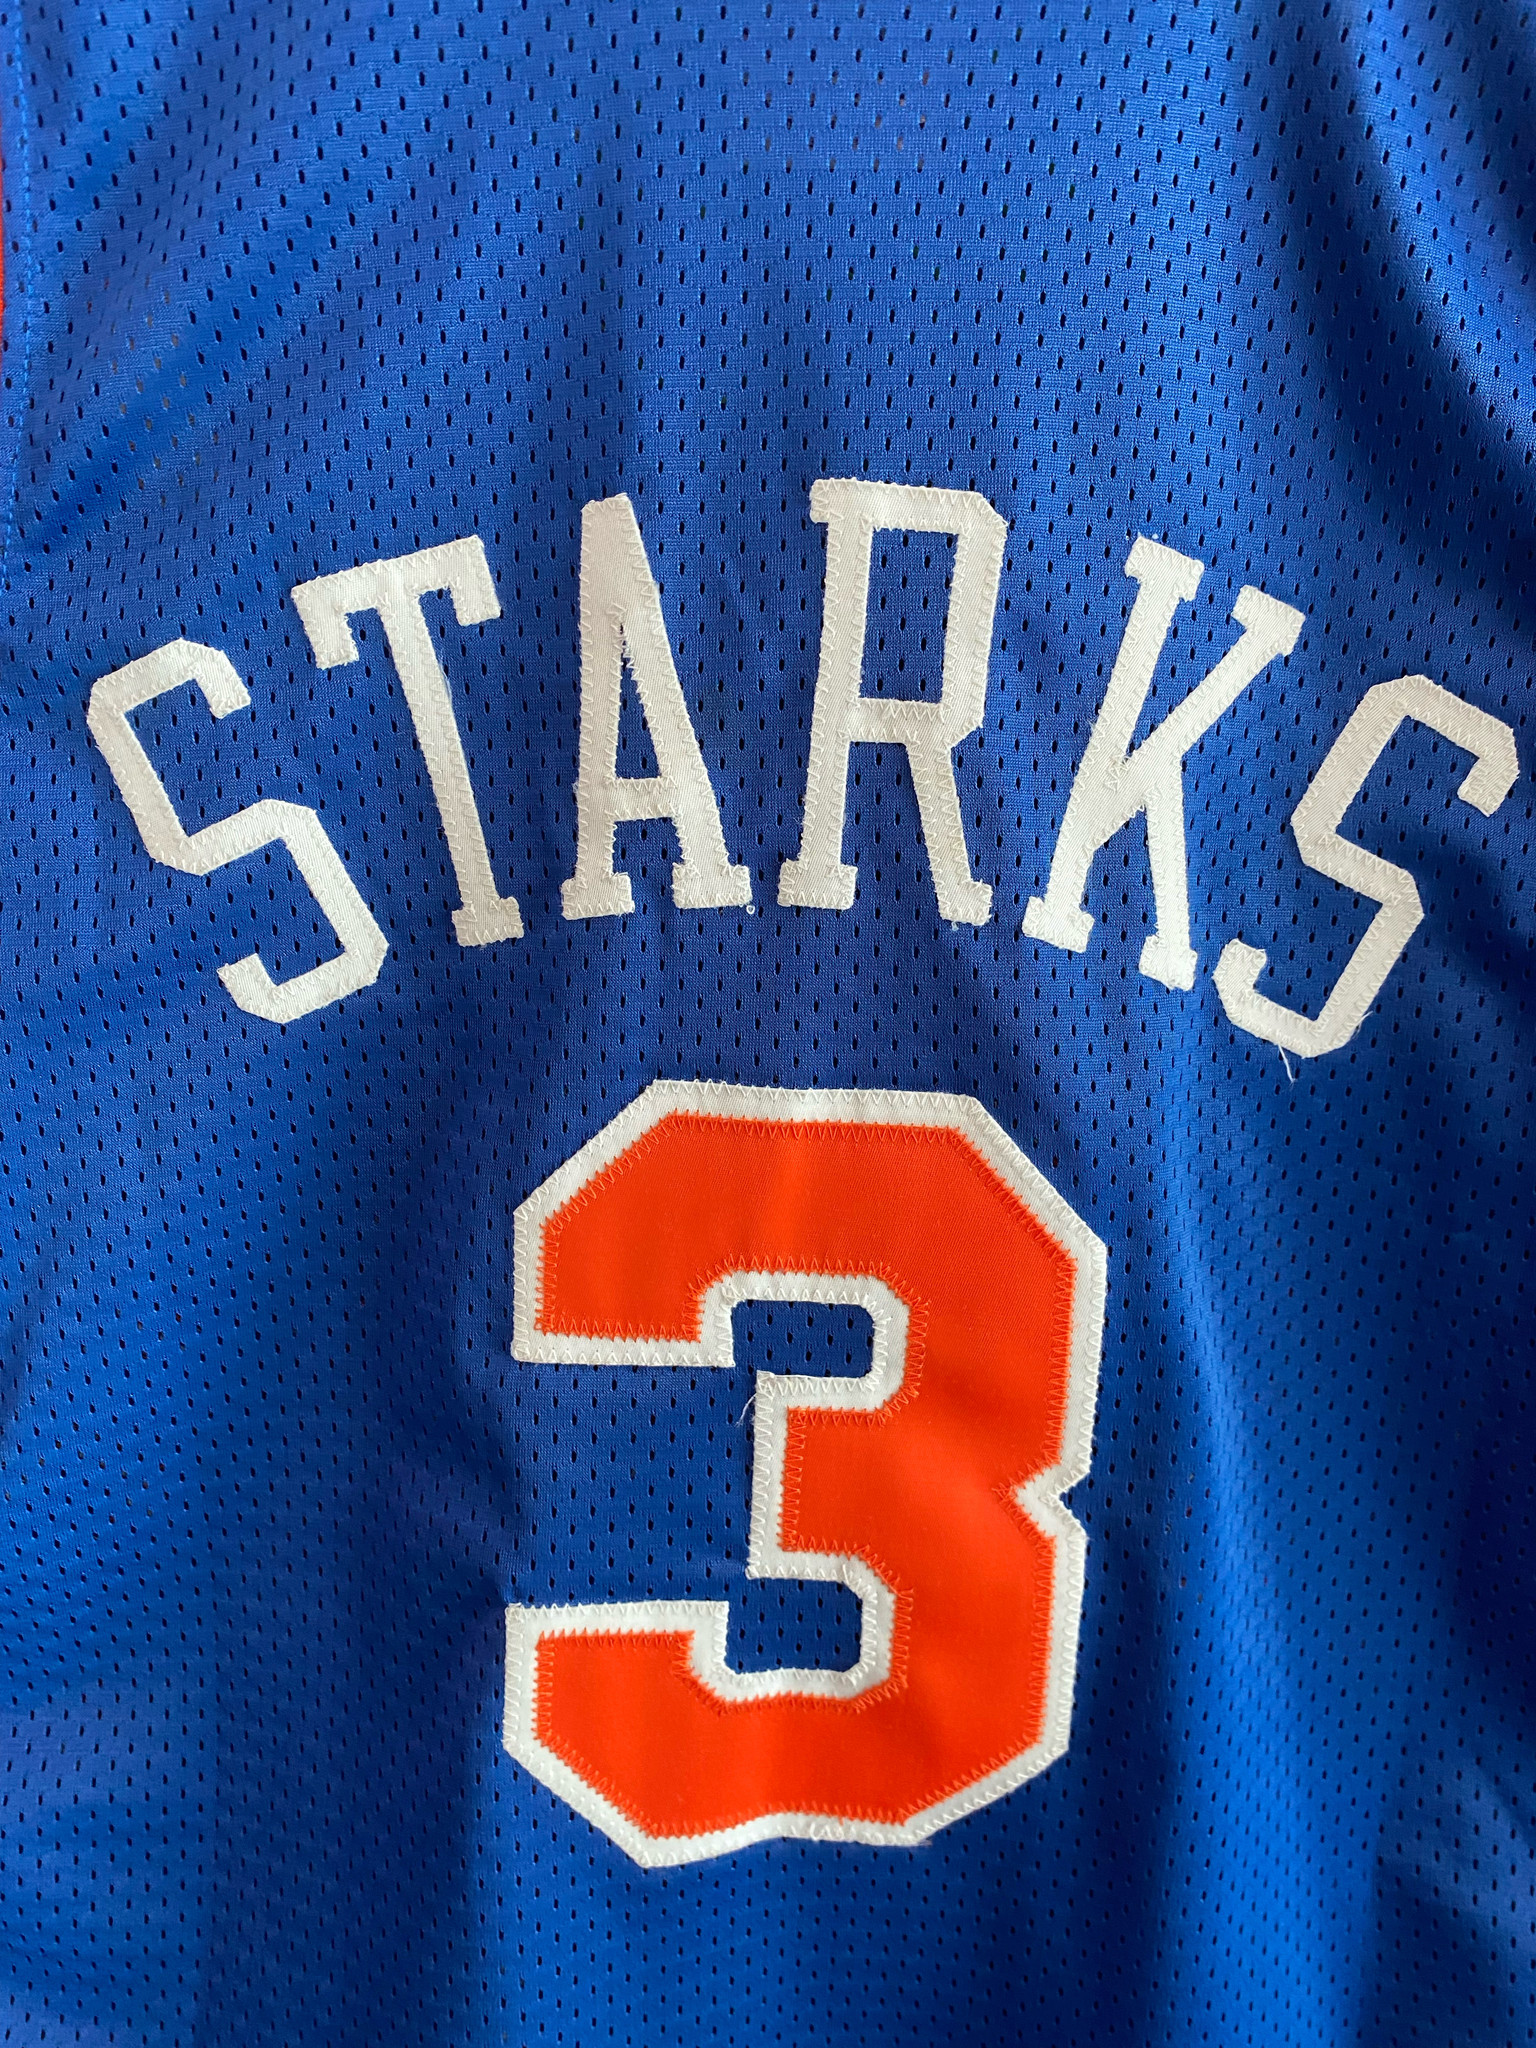 John Starks Signed New York Knicks Blue Jersey (JSA COA) 1994 NBA All –